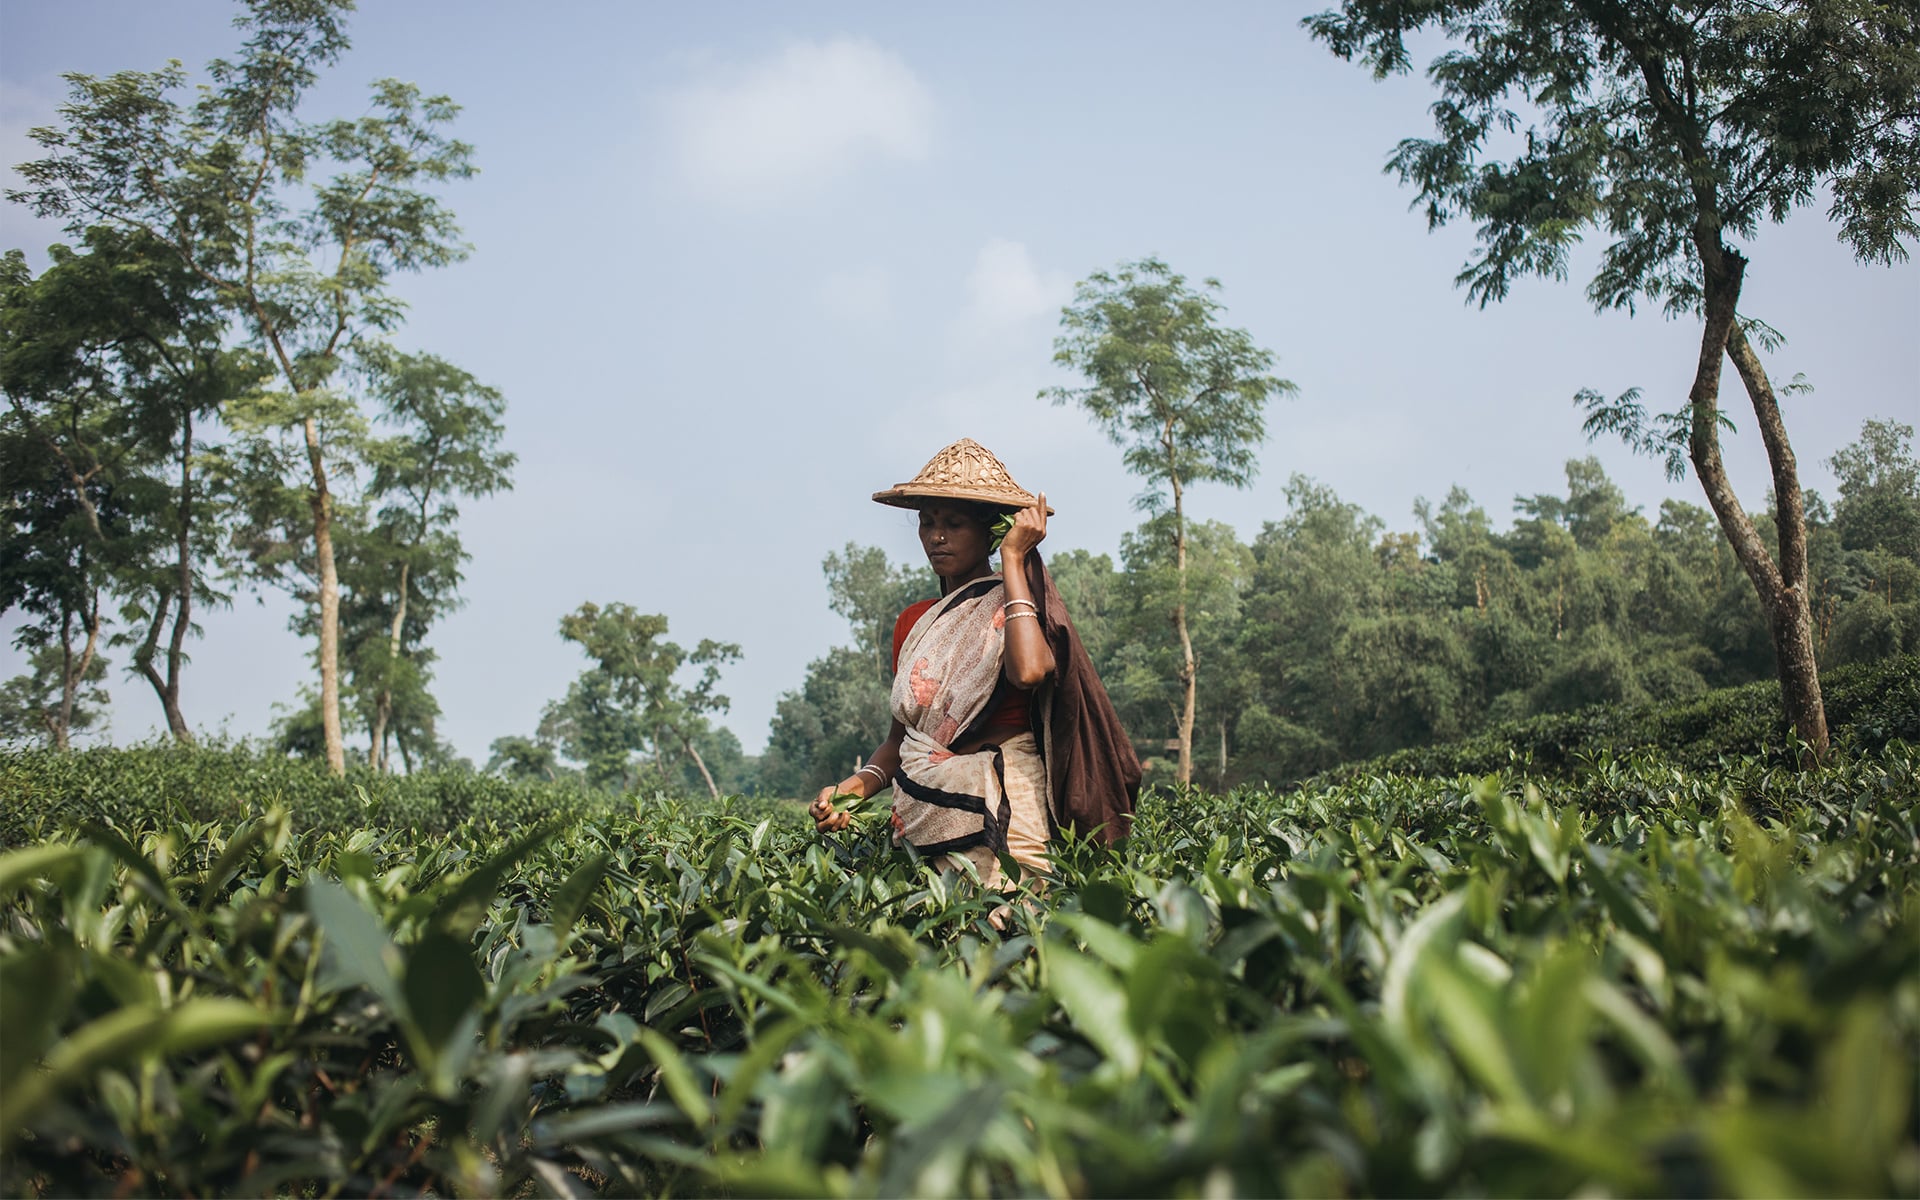 Dipty picks tea leaves in Bangladesh